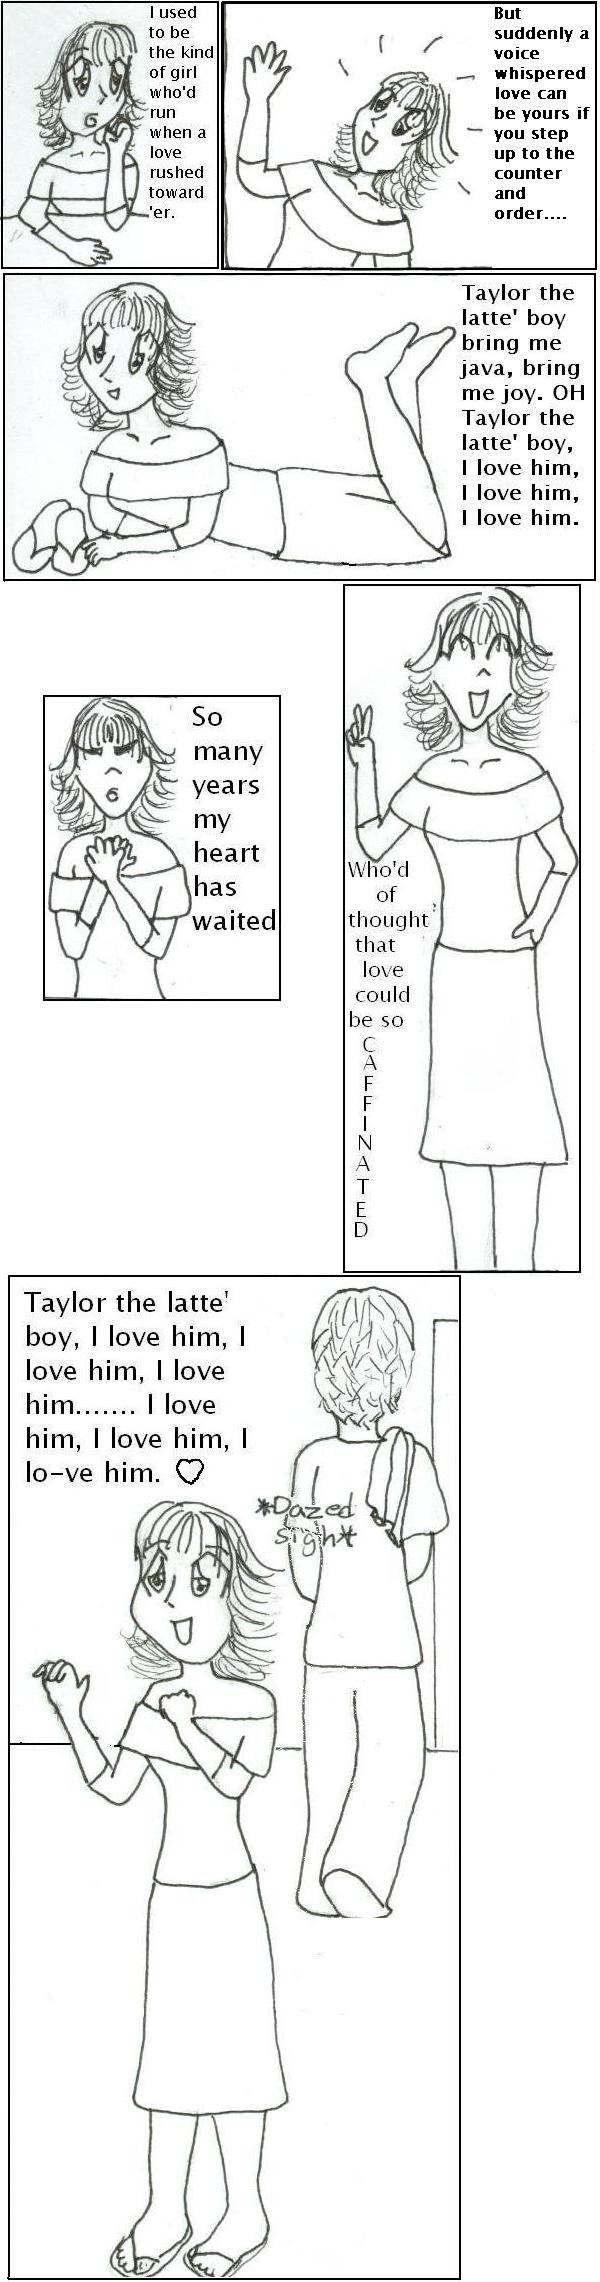 Taylor the latte boy 3 by psycho_girl